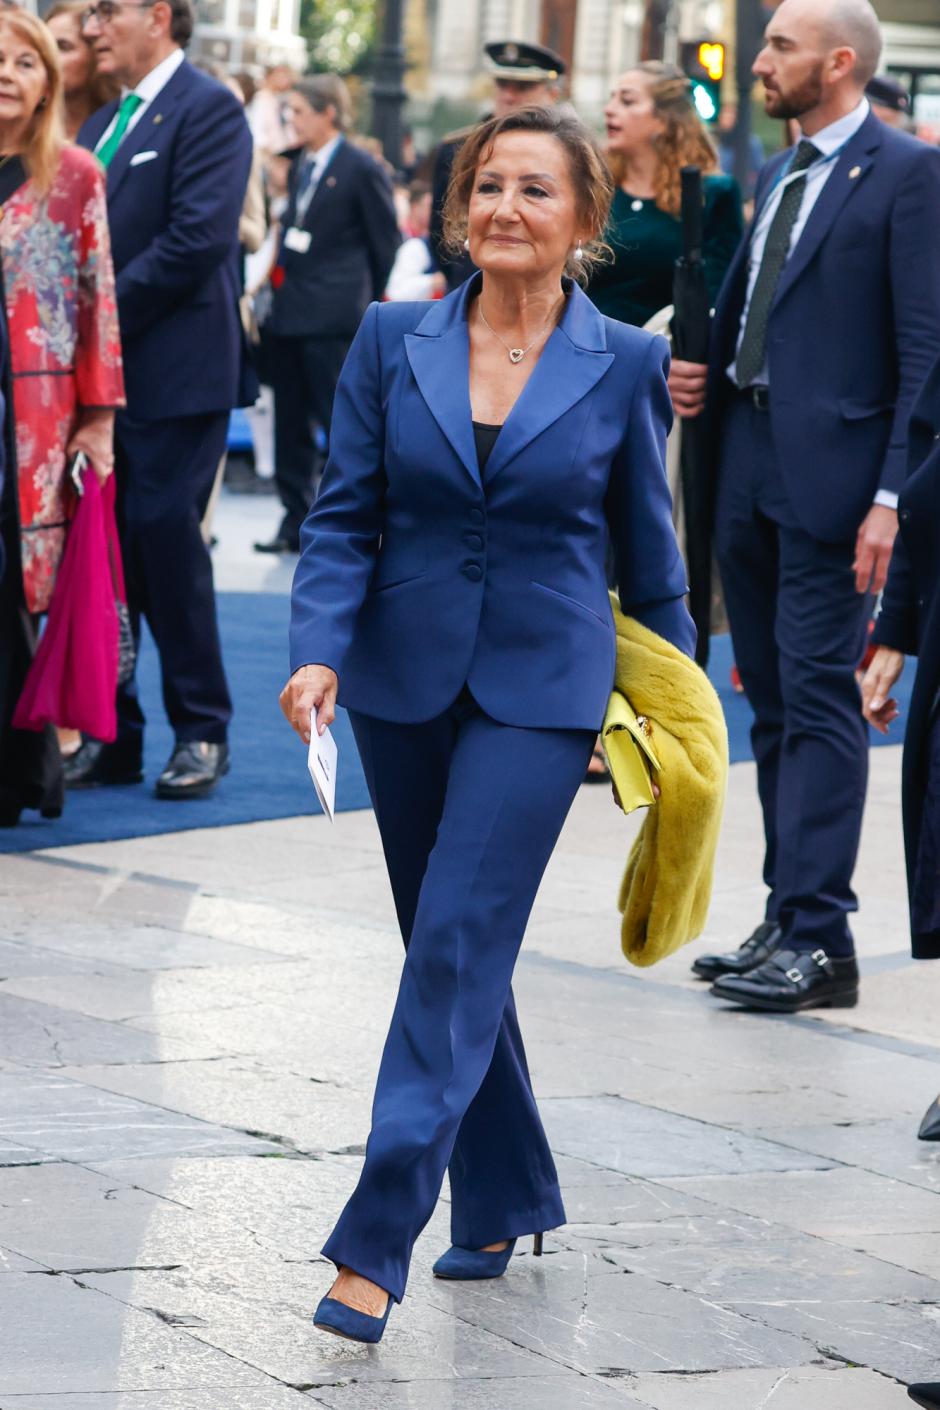 Paloma Rocasolano during the Princess of Asturias Awards 2022 in Oviedo, on Friday 29 October 2022.